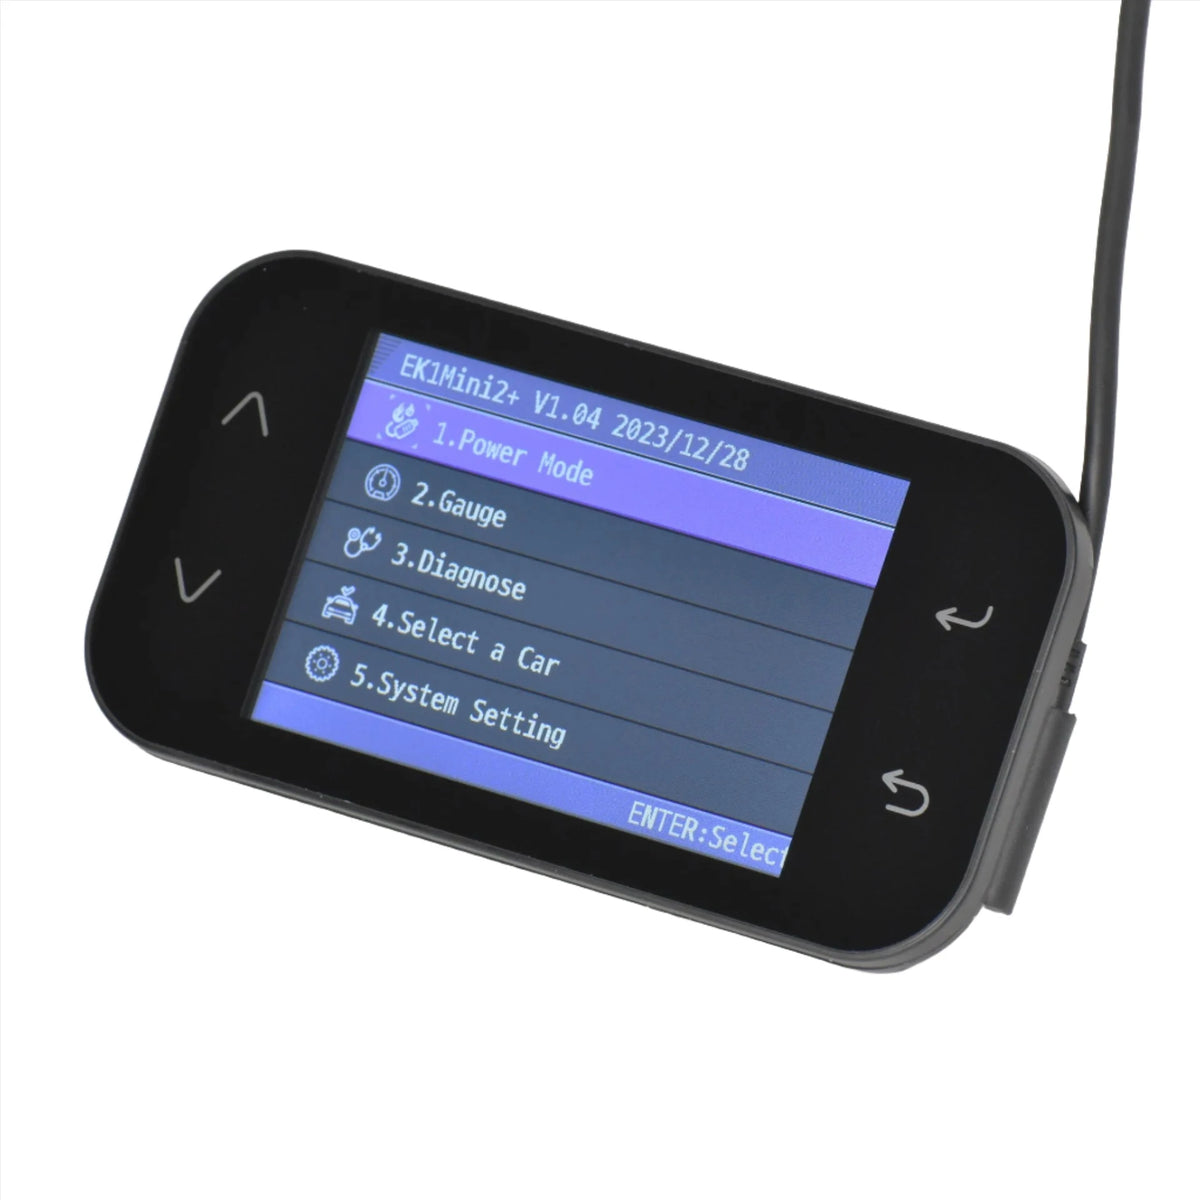 EKmini2+ - Handheld Tuning Device